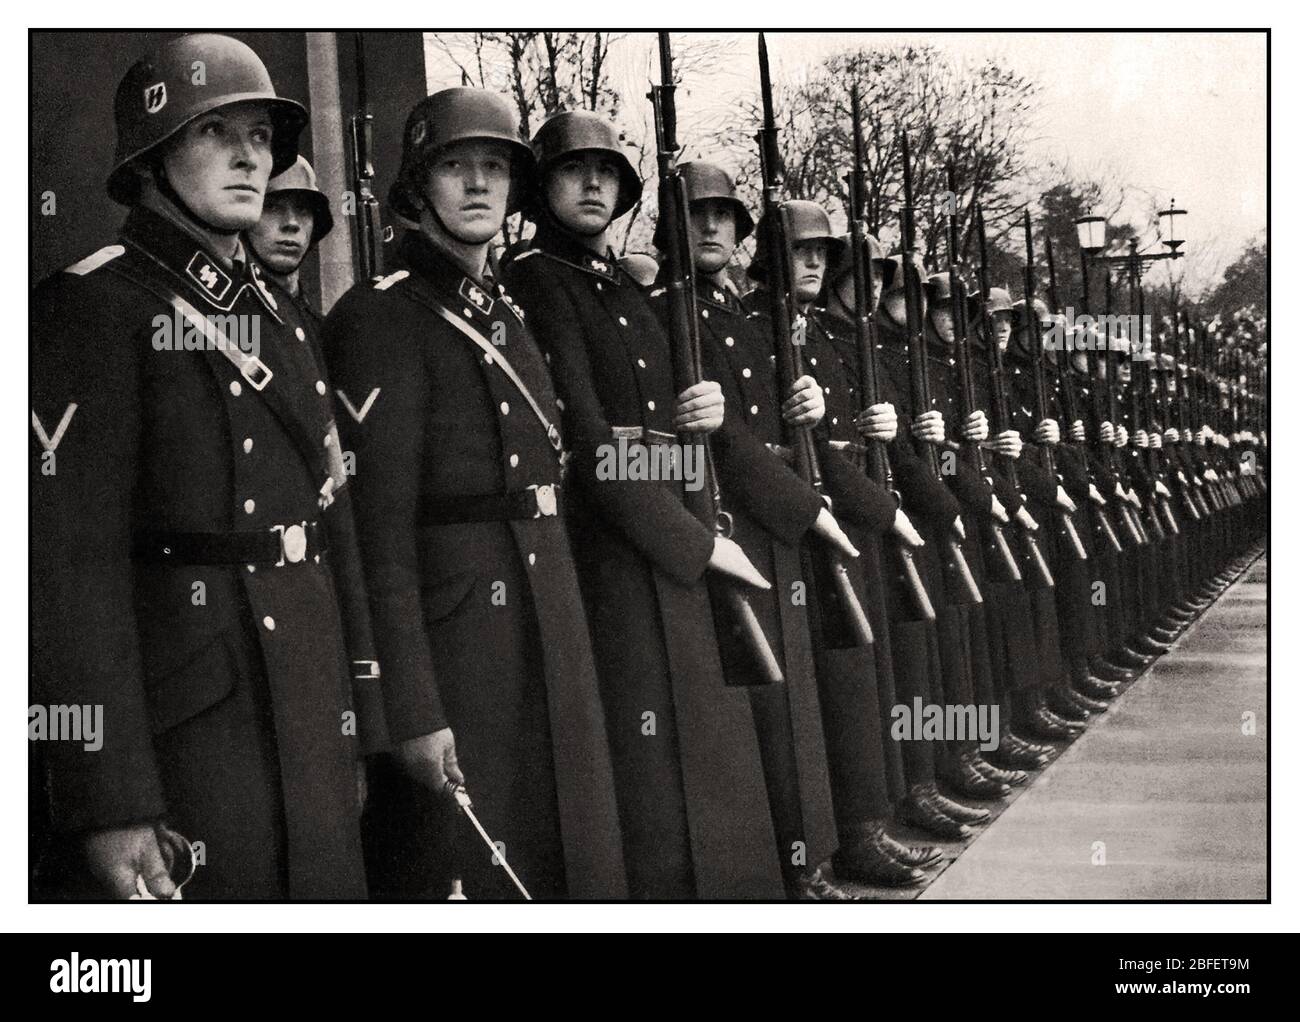 Leibstandarte Ss Adolf Hitler Fotos e Imágenes de stock - Alamy